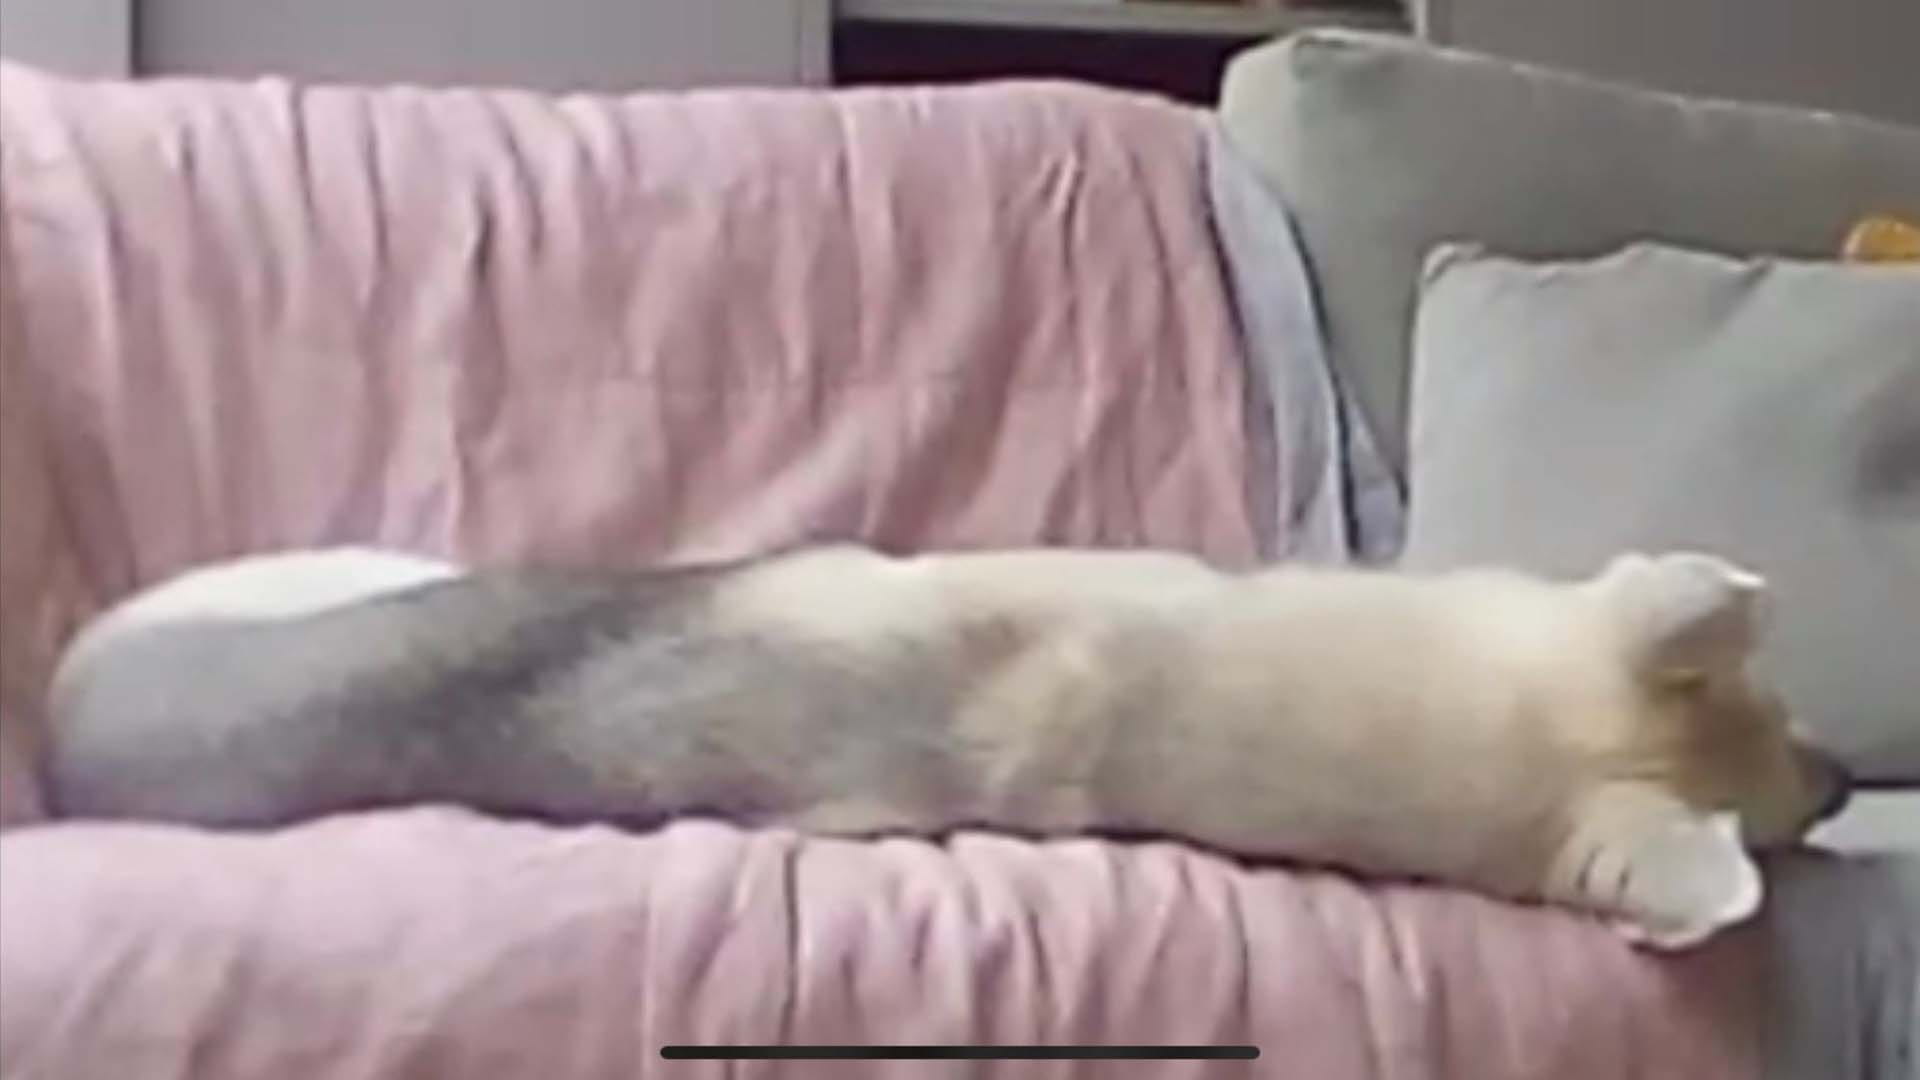 A white dog asleep on a sofa